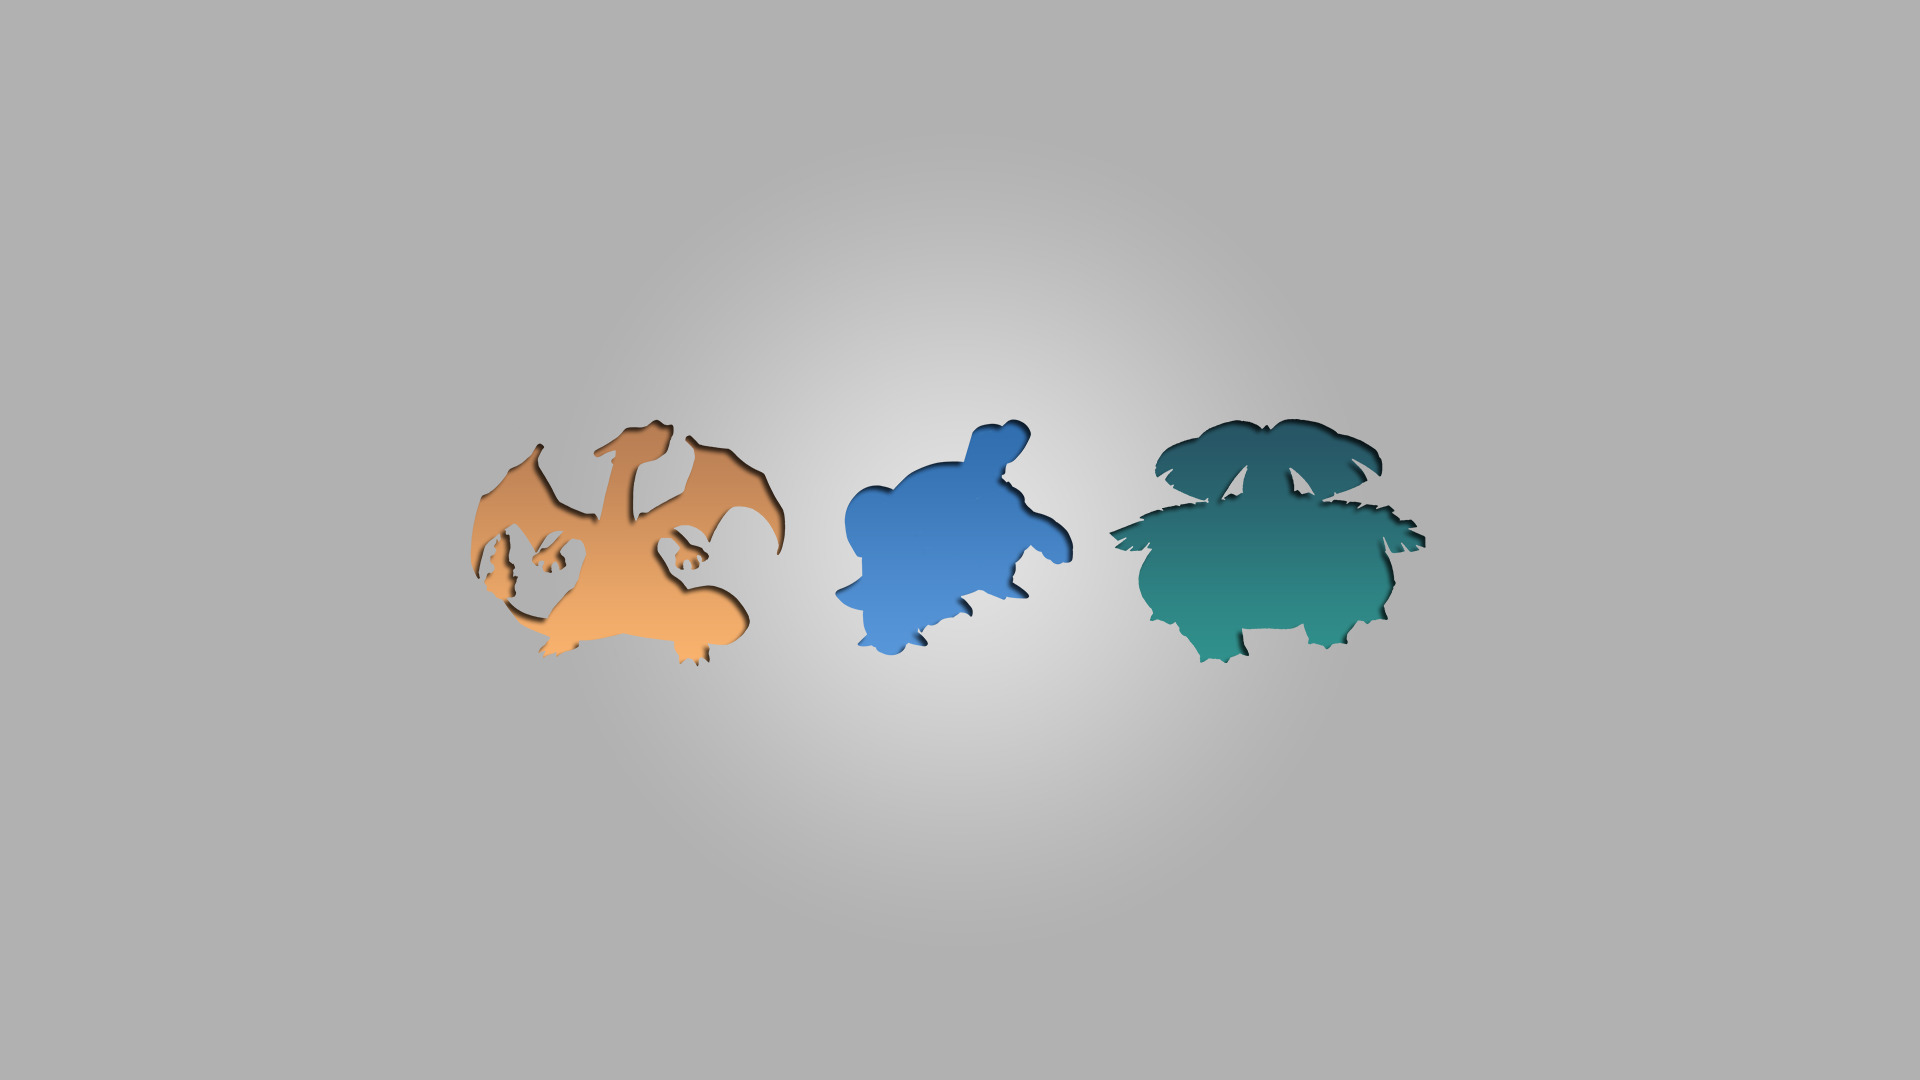 Venusaur, Blastoise, Charizard, Pokémon Wallpaper